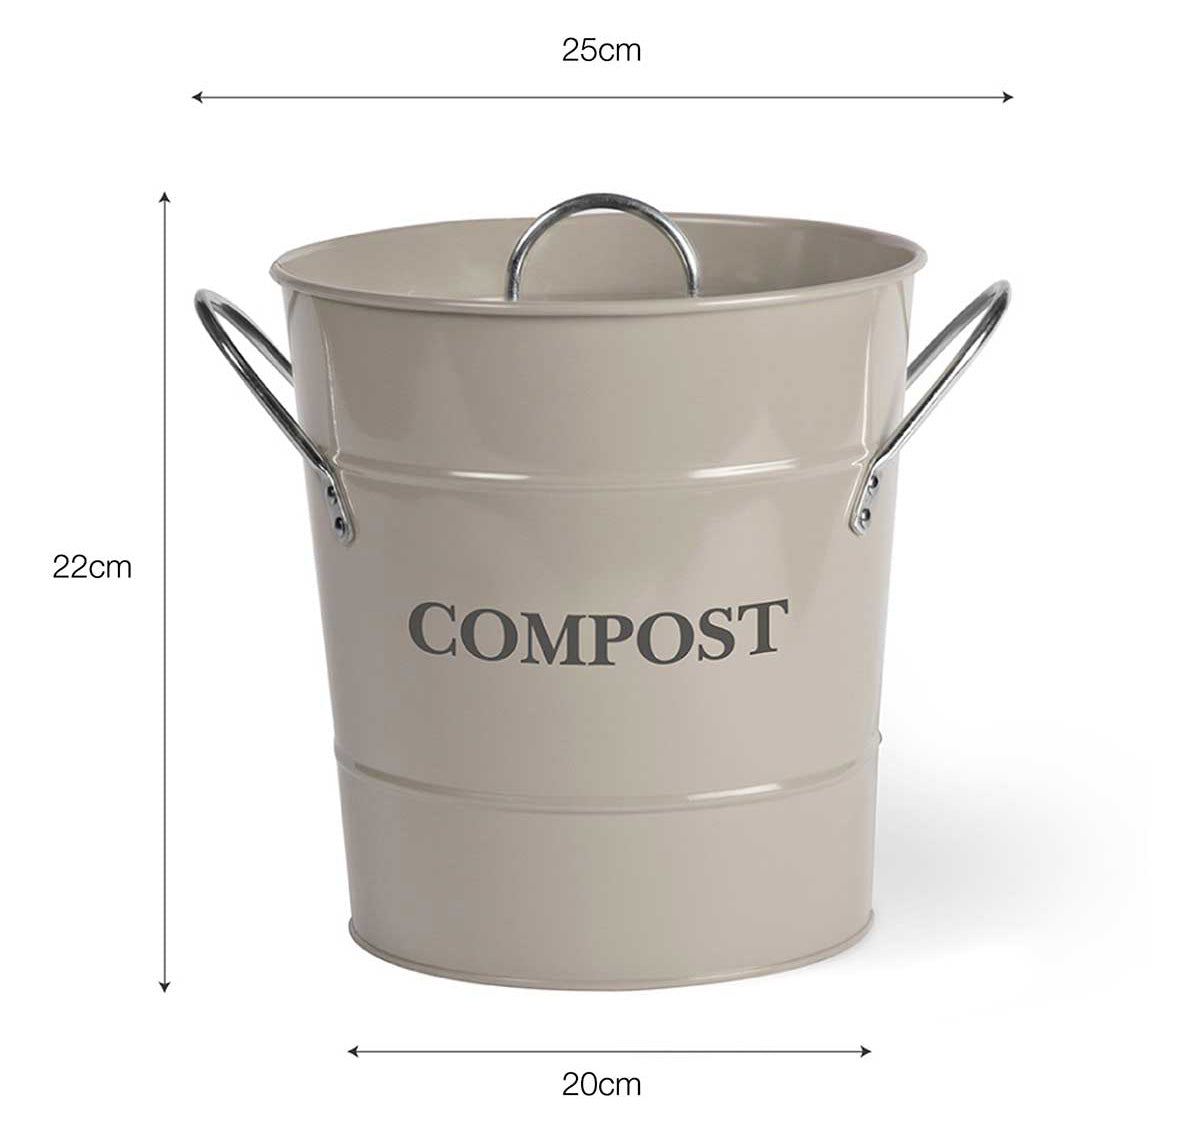 Garden Trading Original Compost Bucket overview